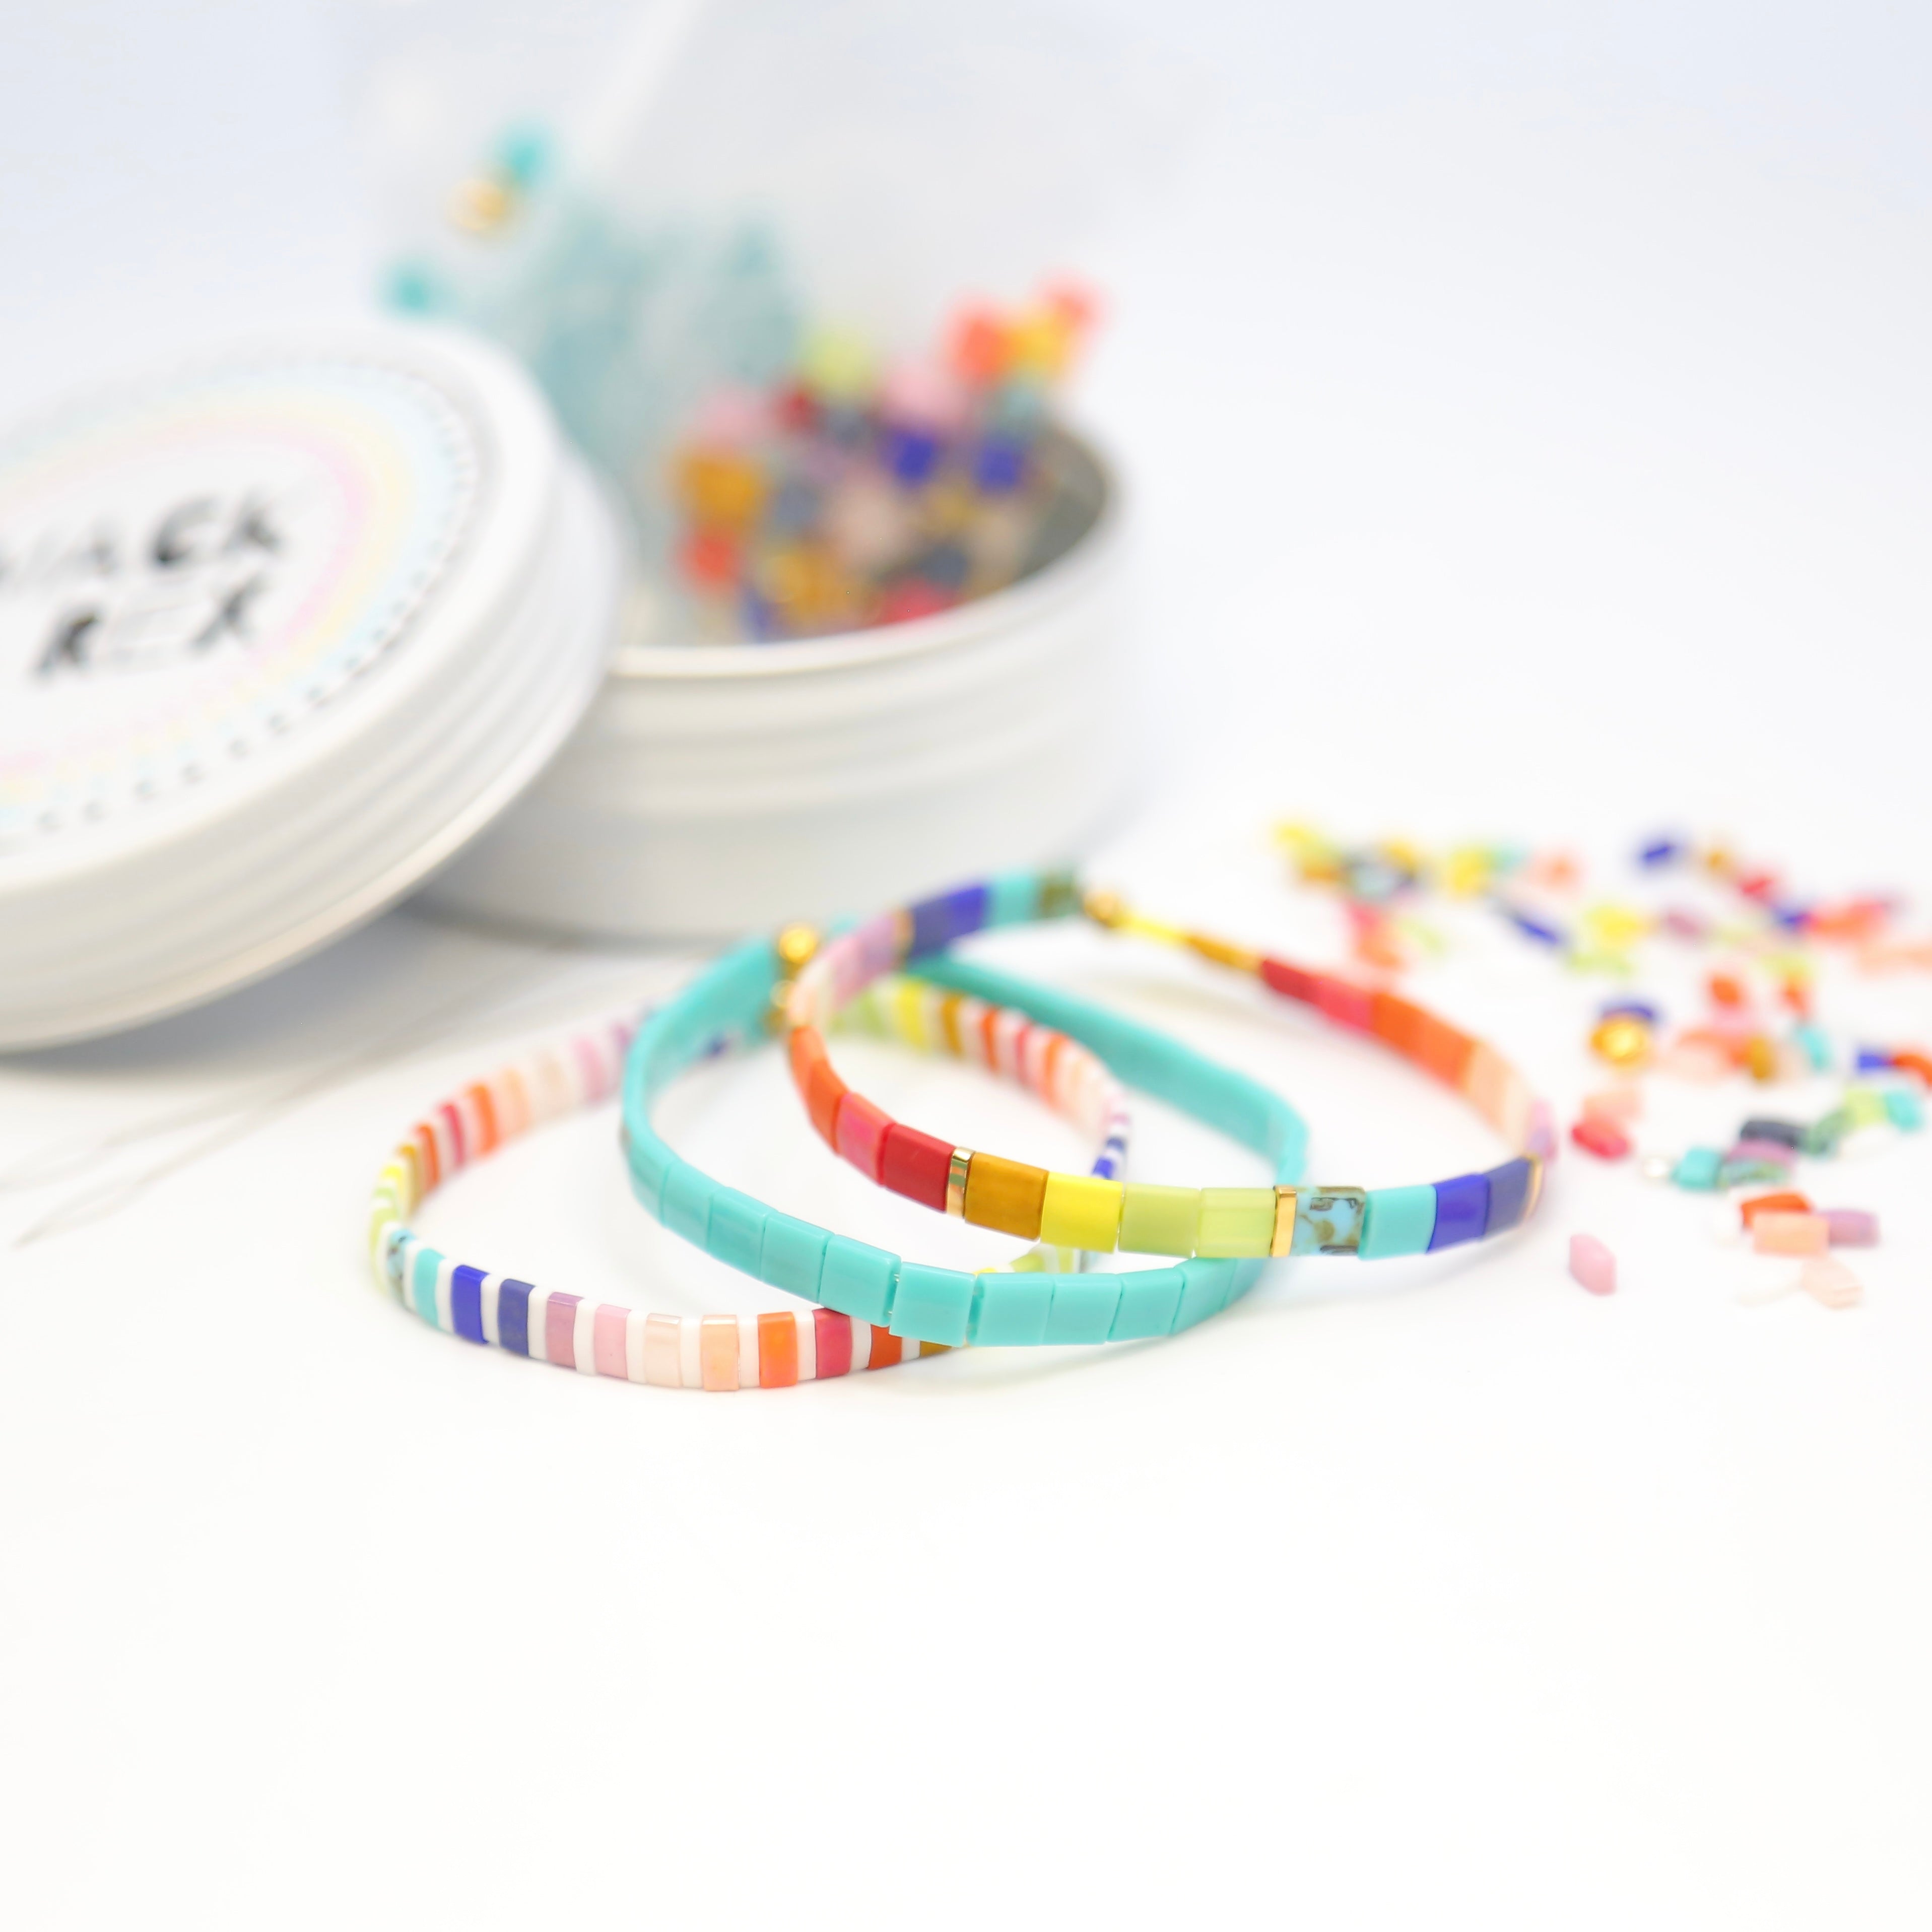 HAPPY - Bracelet Making Kit - DIY 3 Bracelets – Mack & Rex